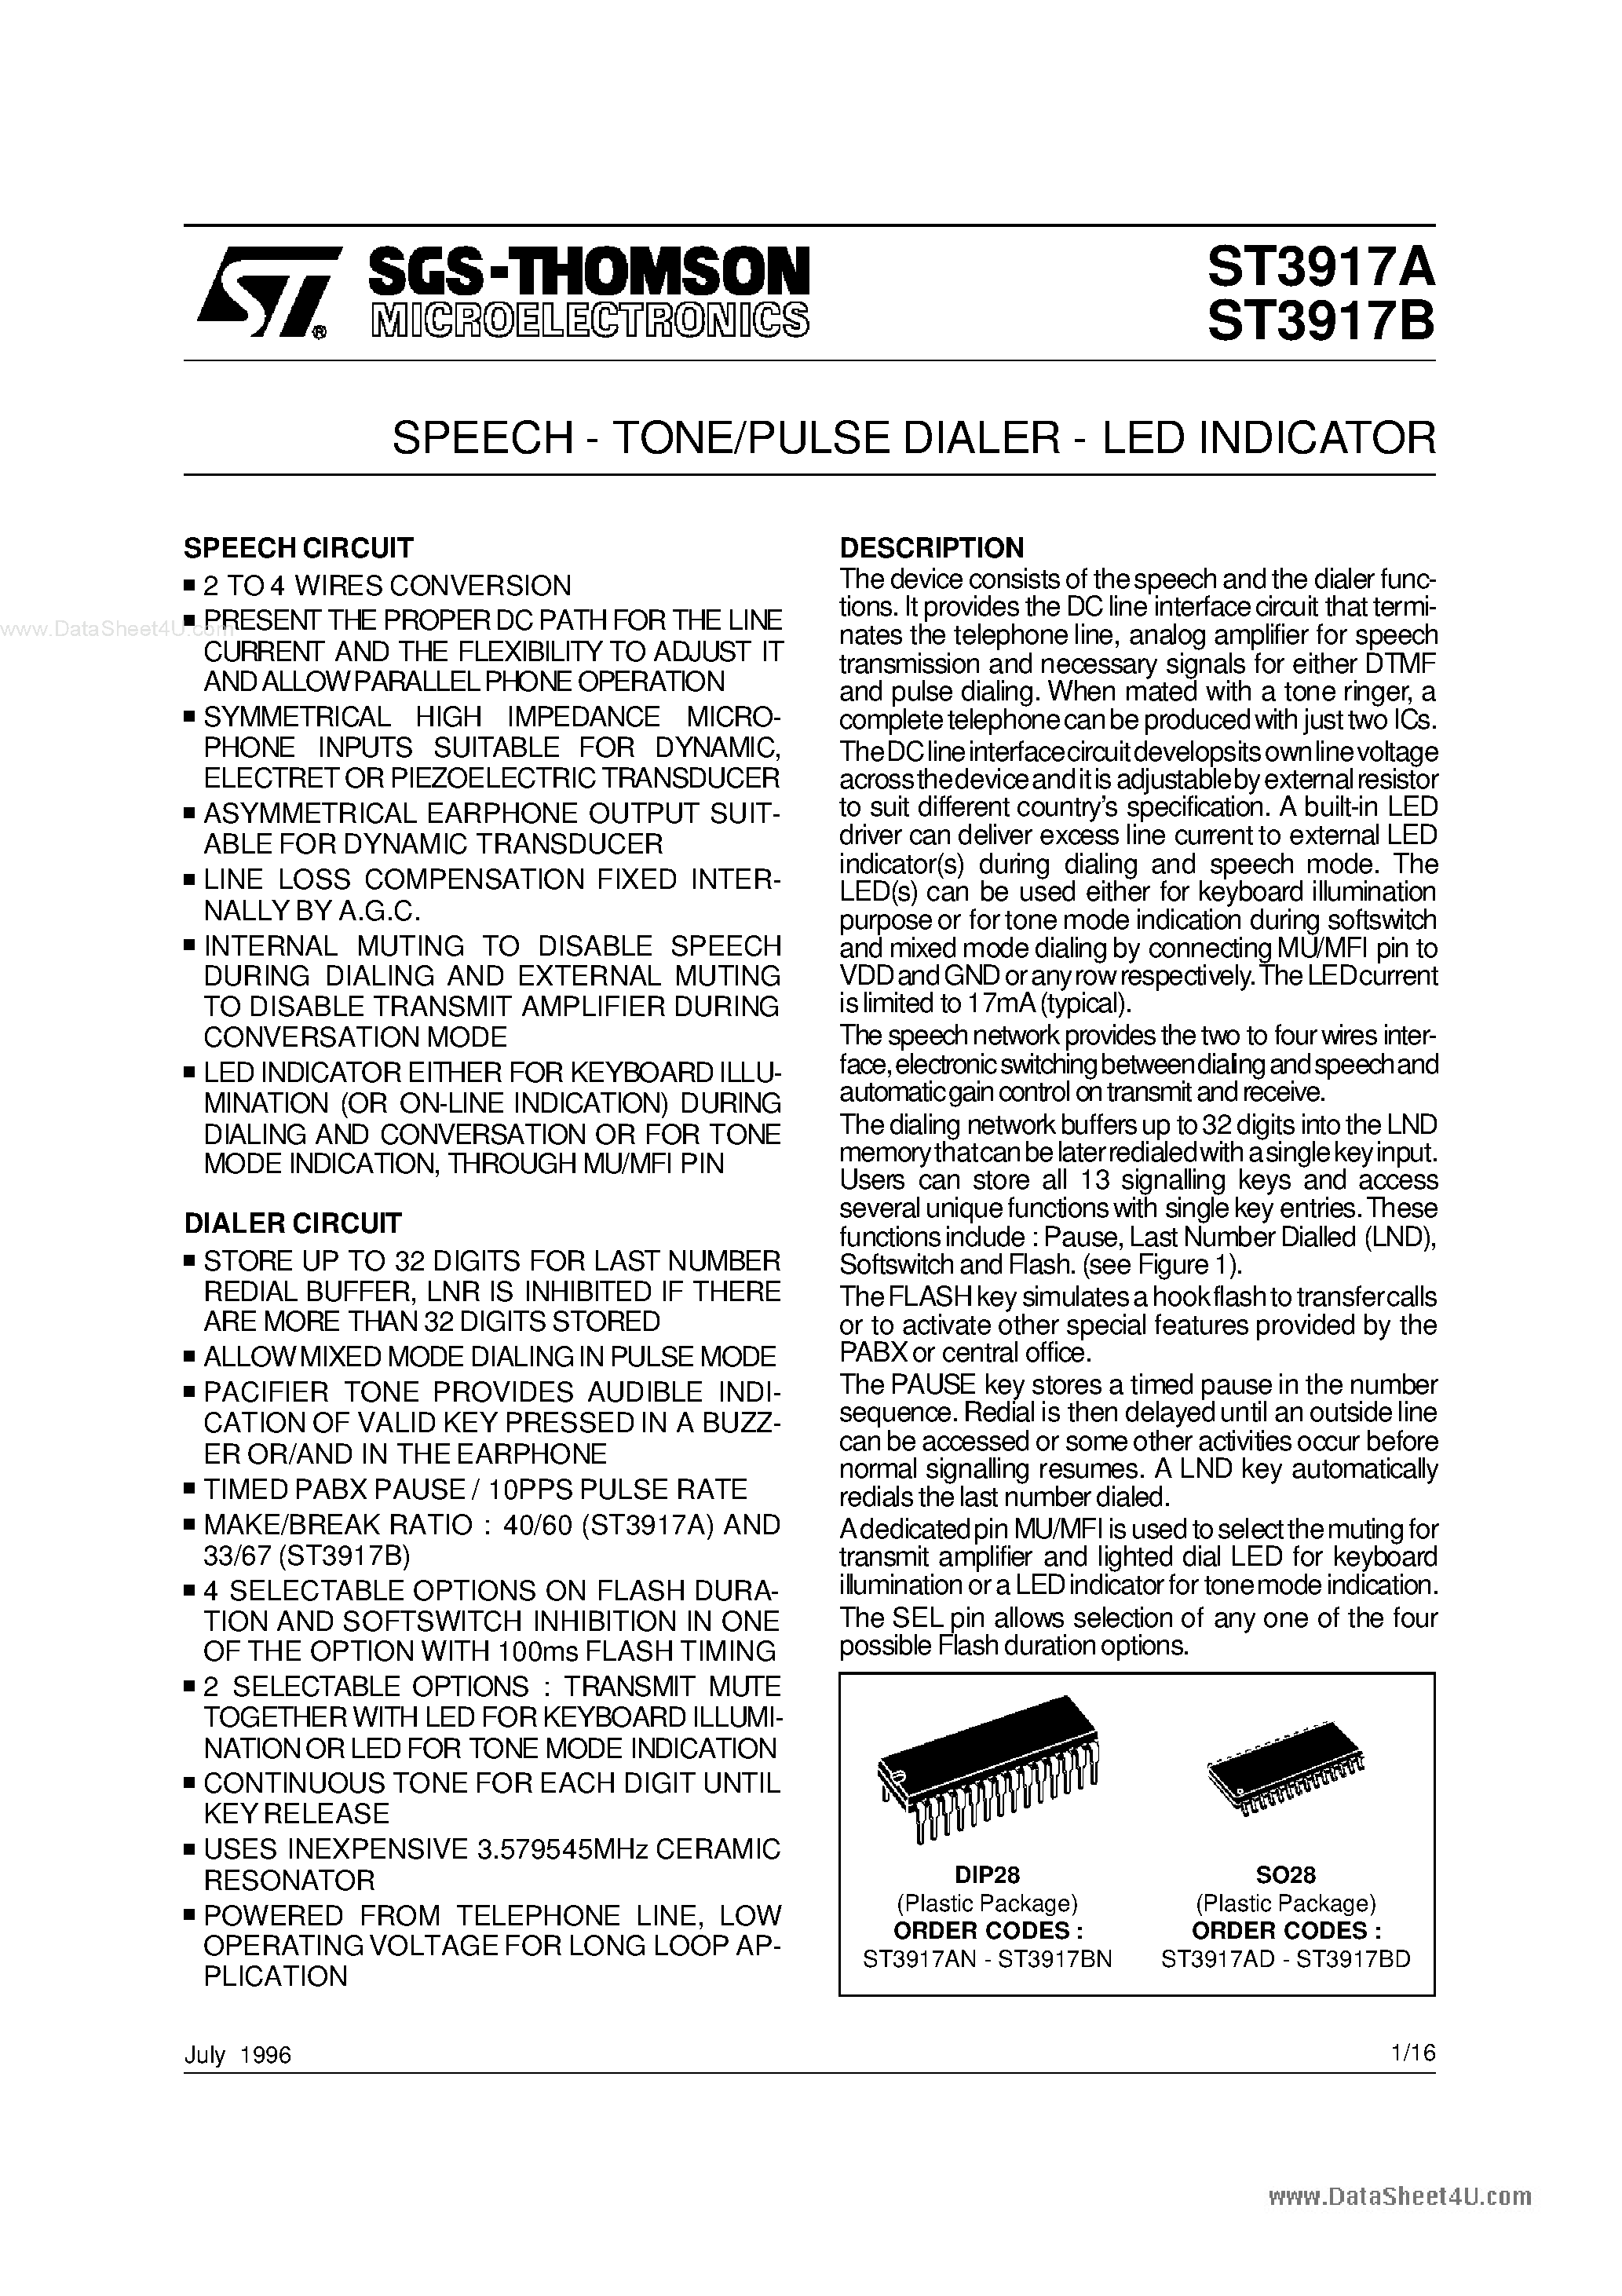 Datasheet ST3938A - SPEECH - TONE/PULSE DIALER - LED INDICATOR page 1